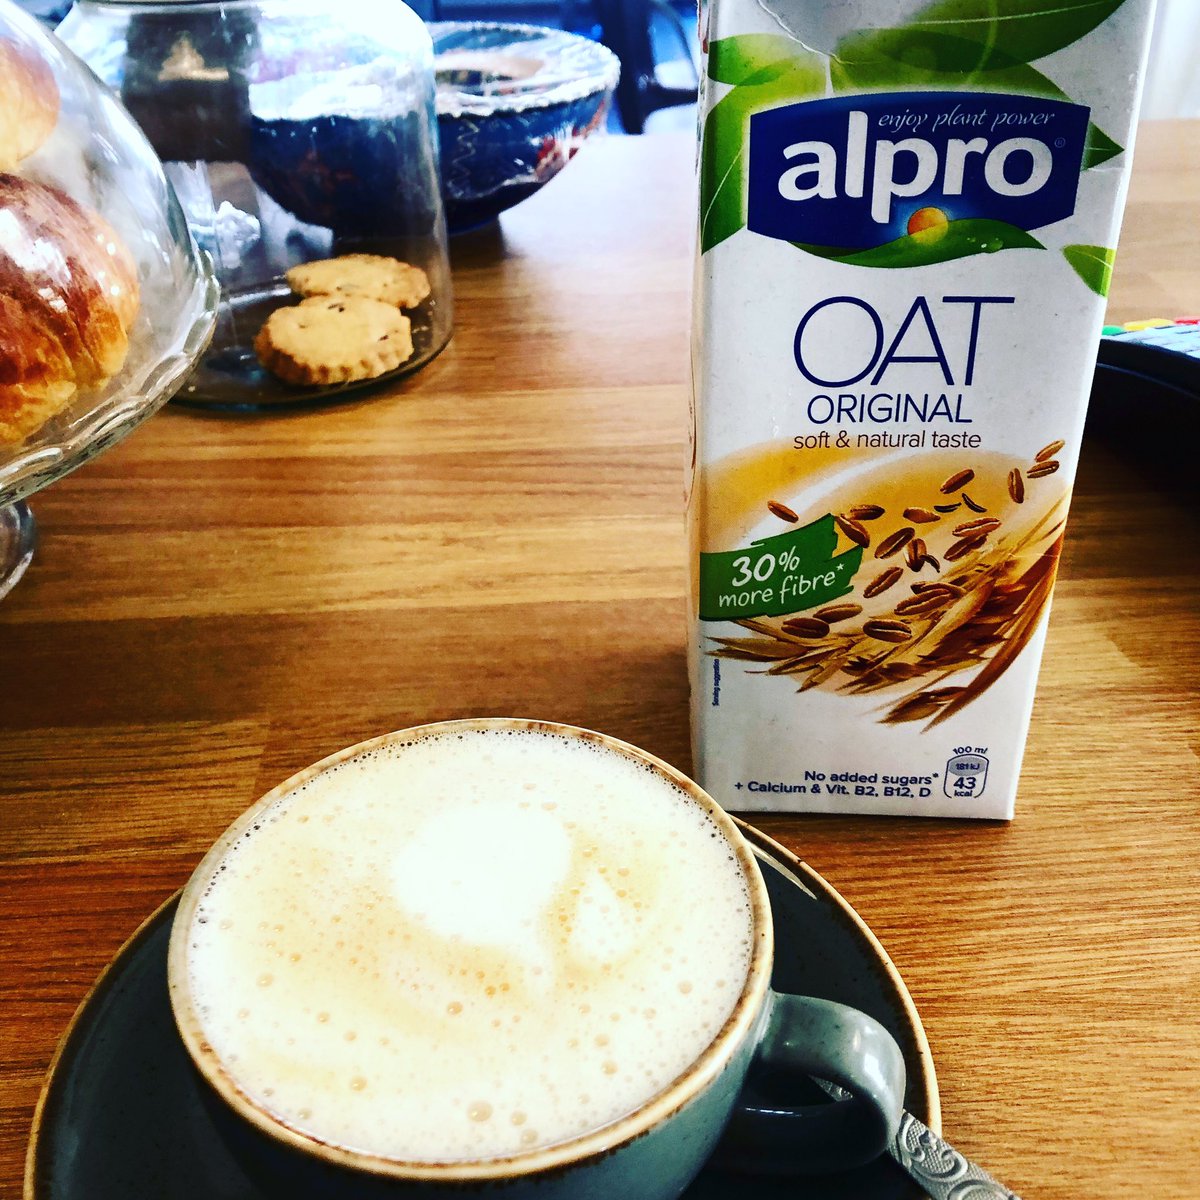 We now stock Oat Milk in our range of alternative milks, why not try your coffee with a different milk #vegan #vegetarian #alternativeoptions #dairyfree #oatmilk #almondmilk #soyamilk #cafe #coffeeshop #georgiaskitchen #hamptonhill